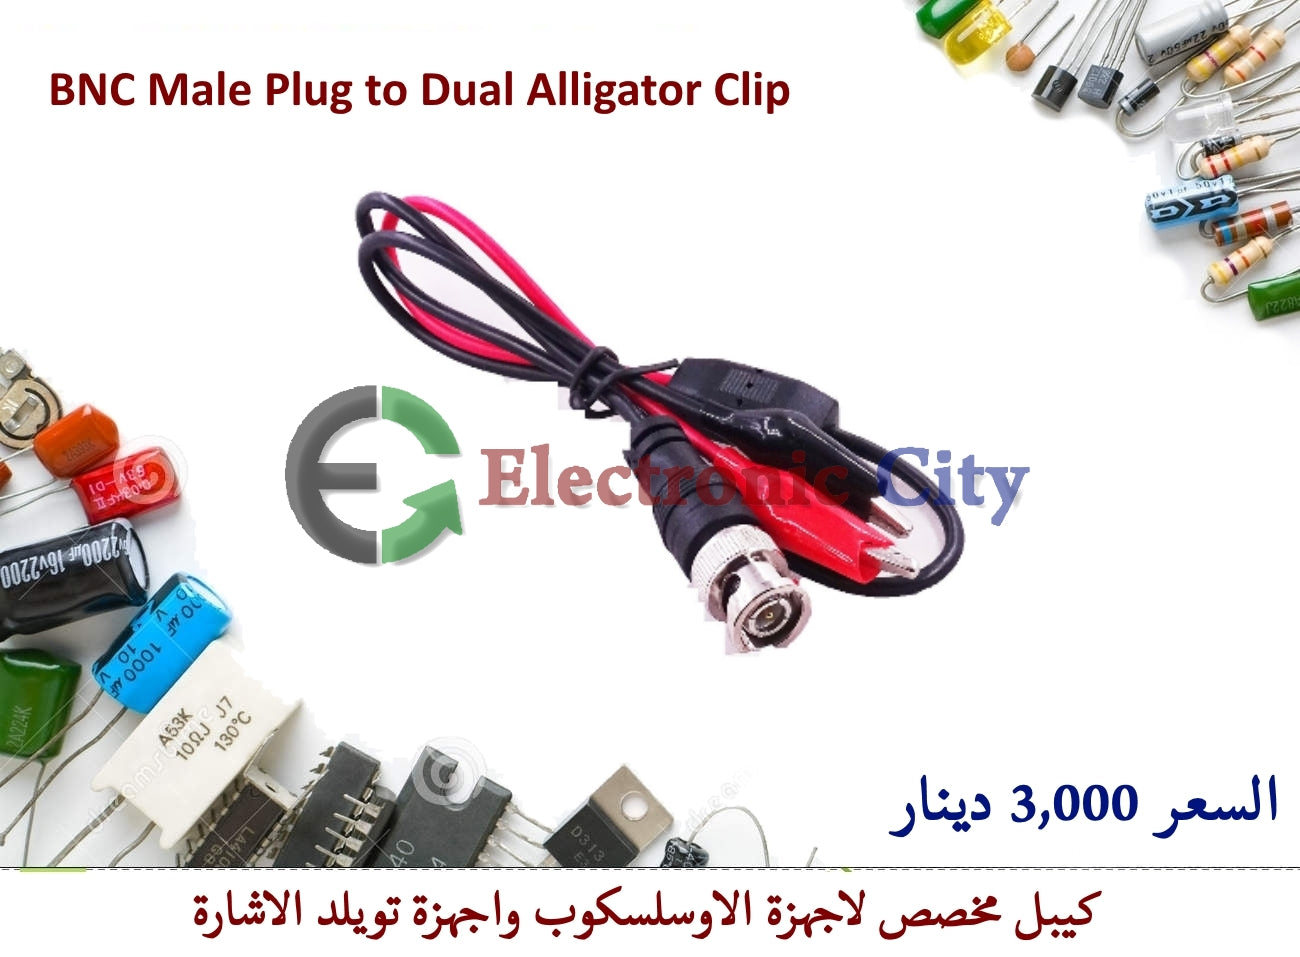 BNC Male Plug to Dual Alligator Clip #2 X52093